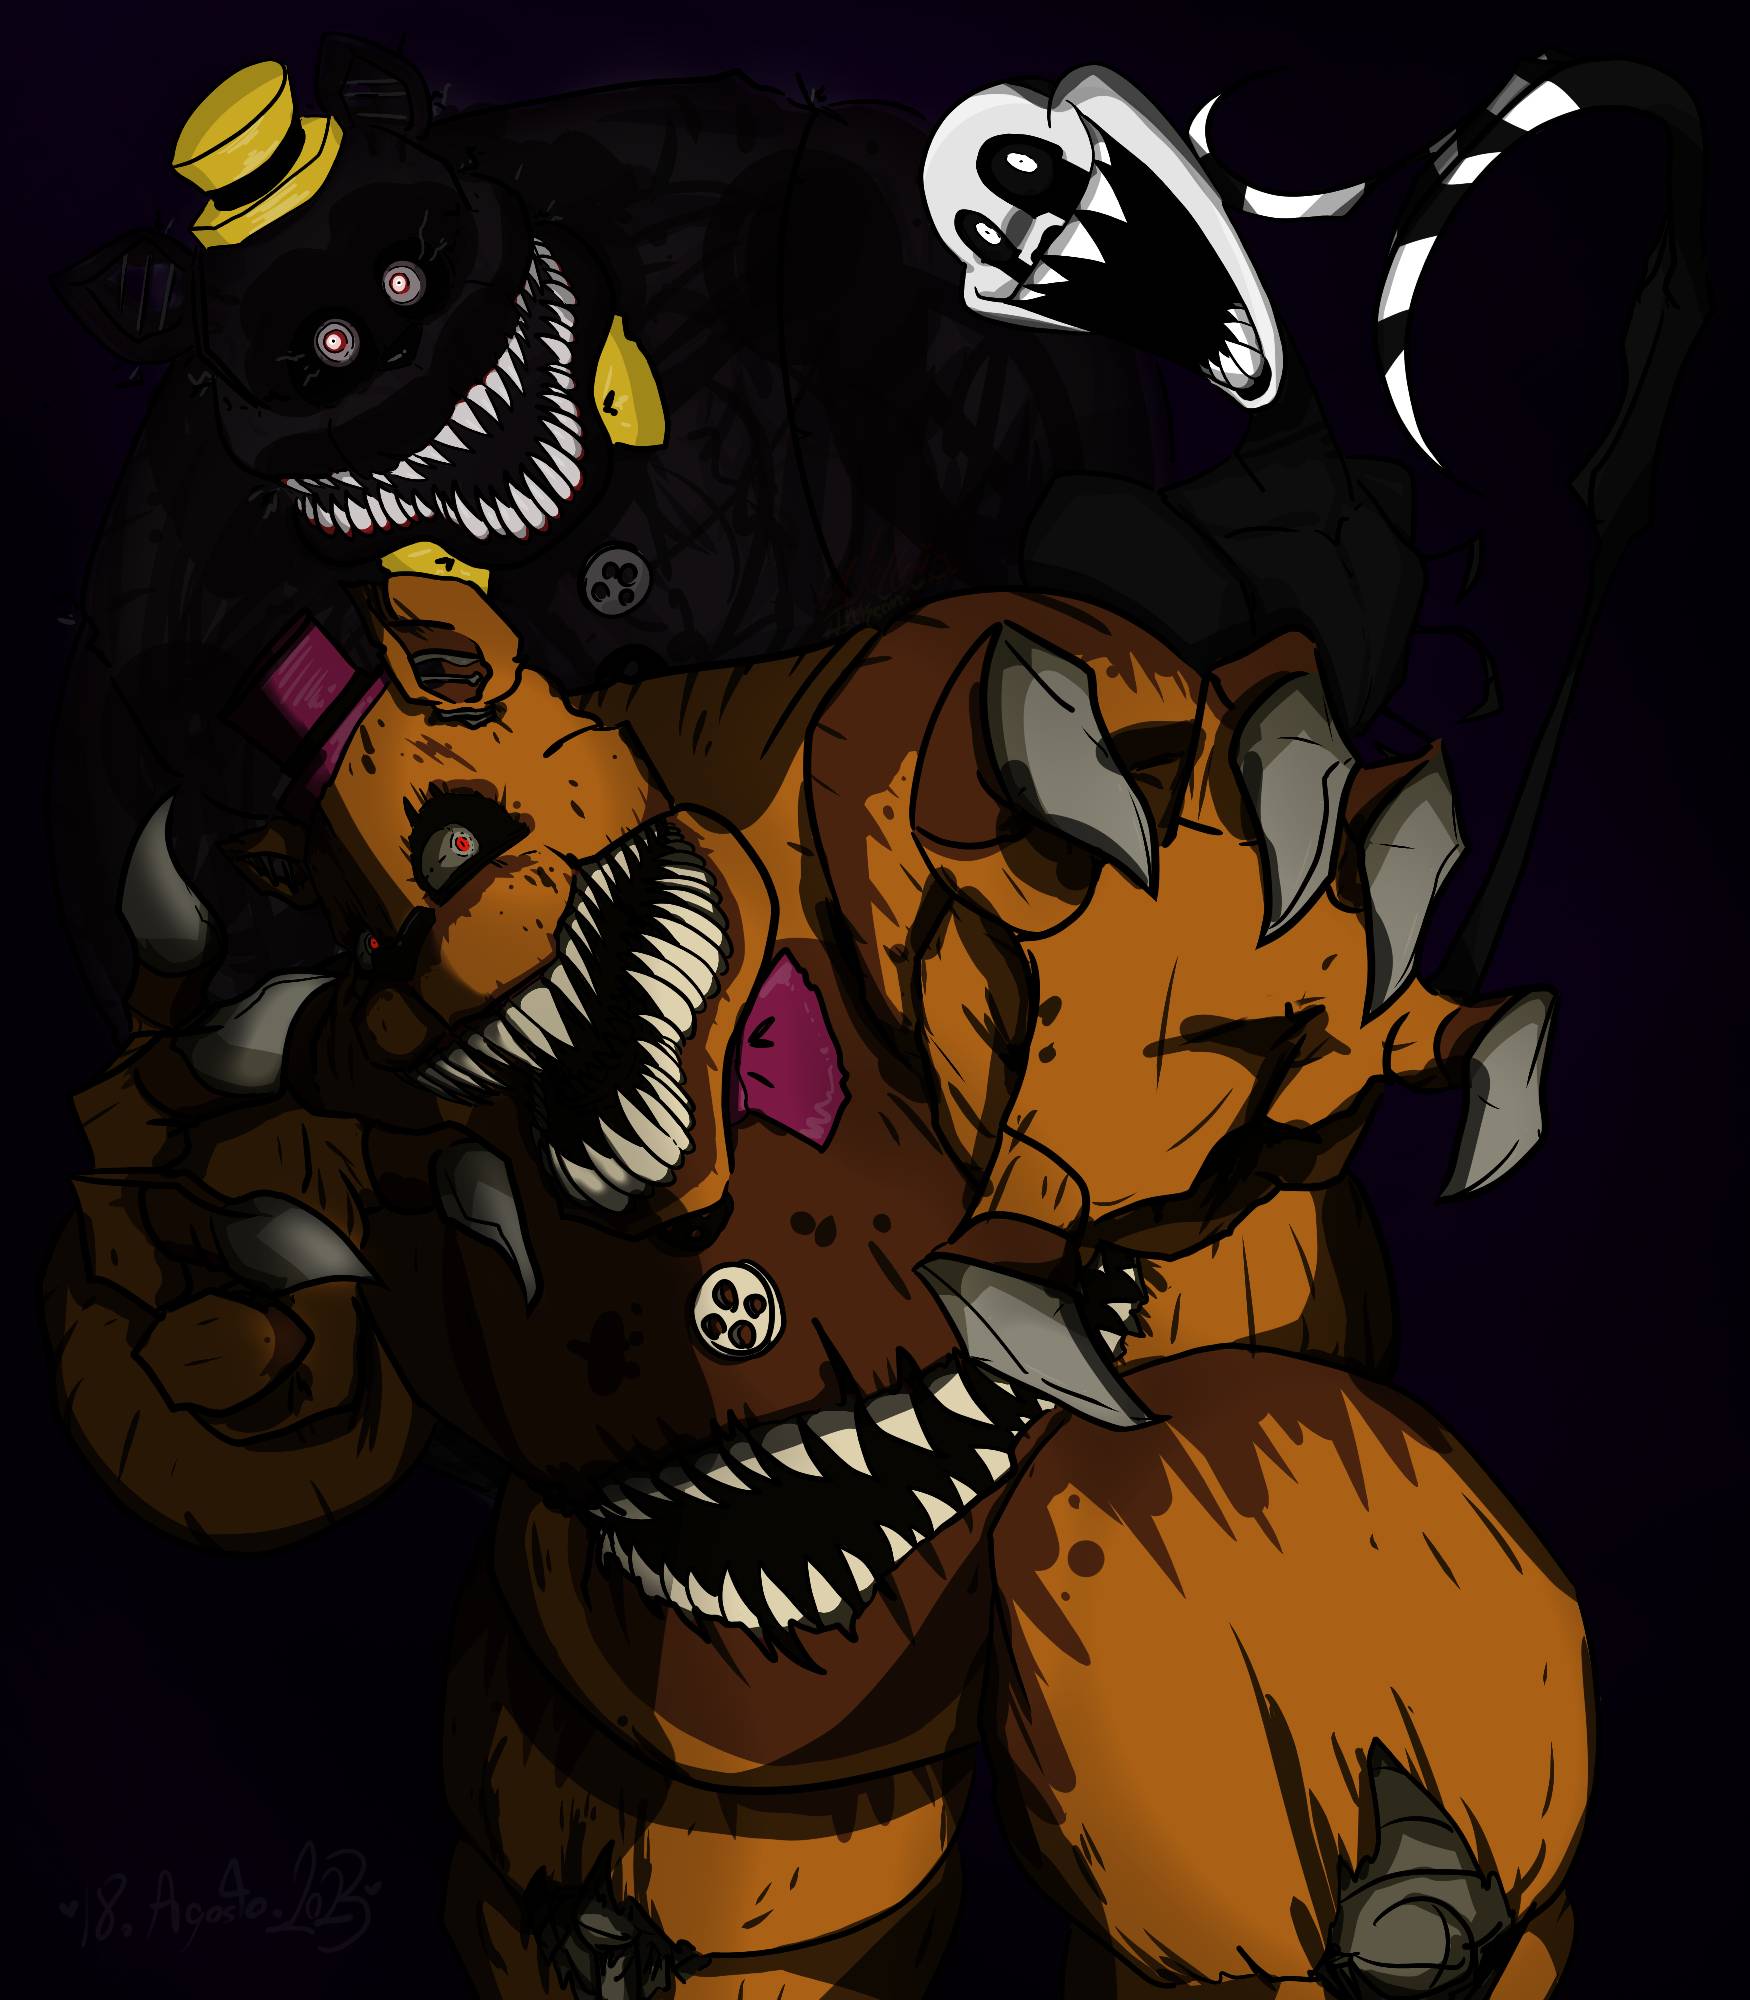 Nightmare Foxy and Nightmare Fredbear Cosplay by brnnightmare on DeviantArt